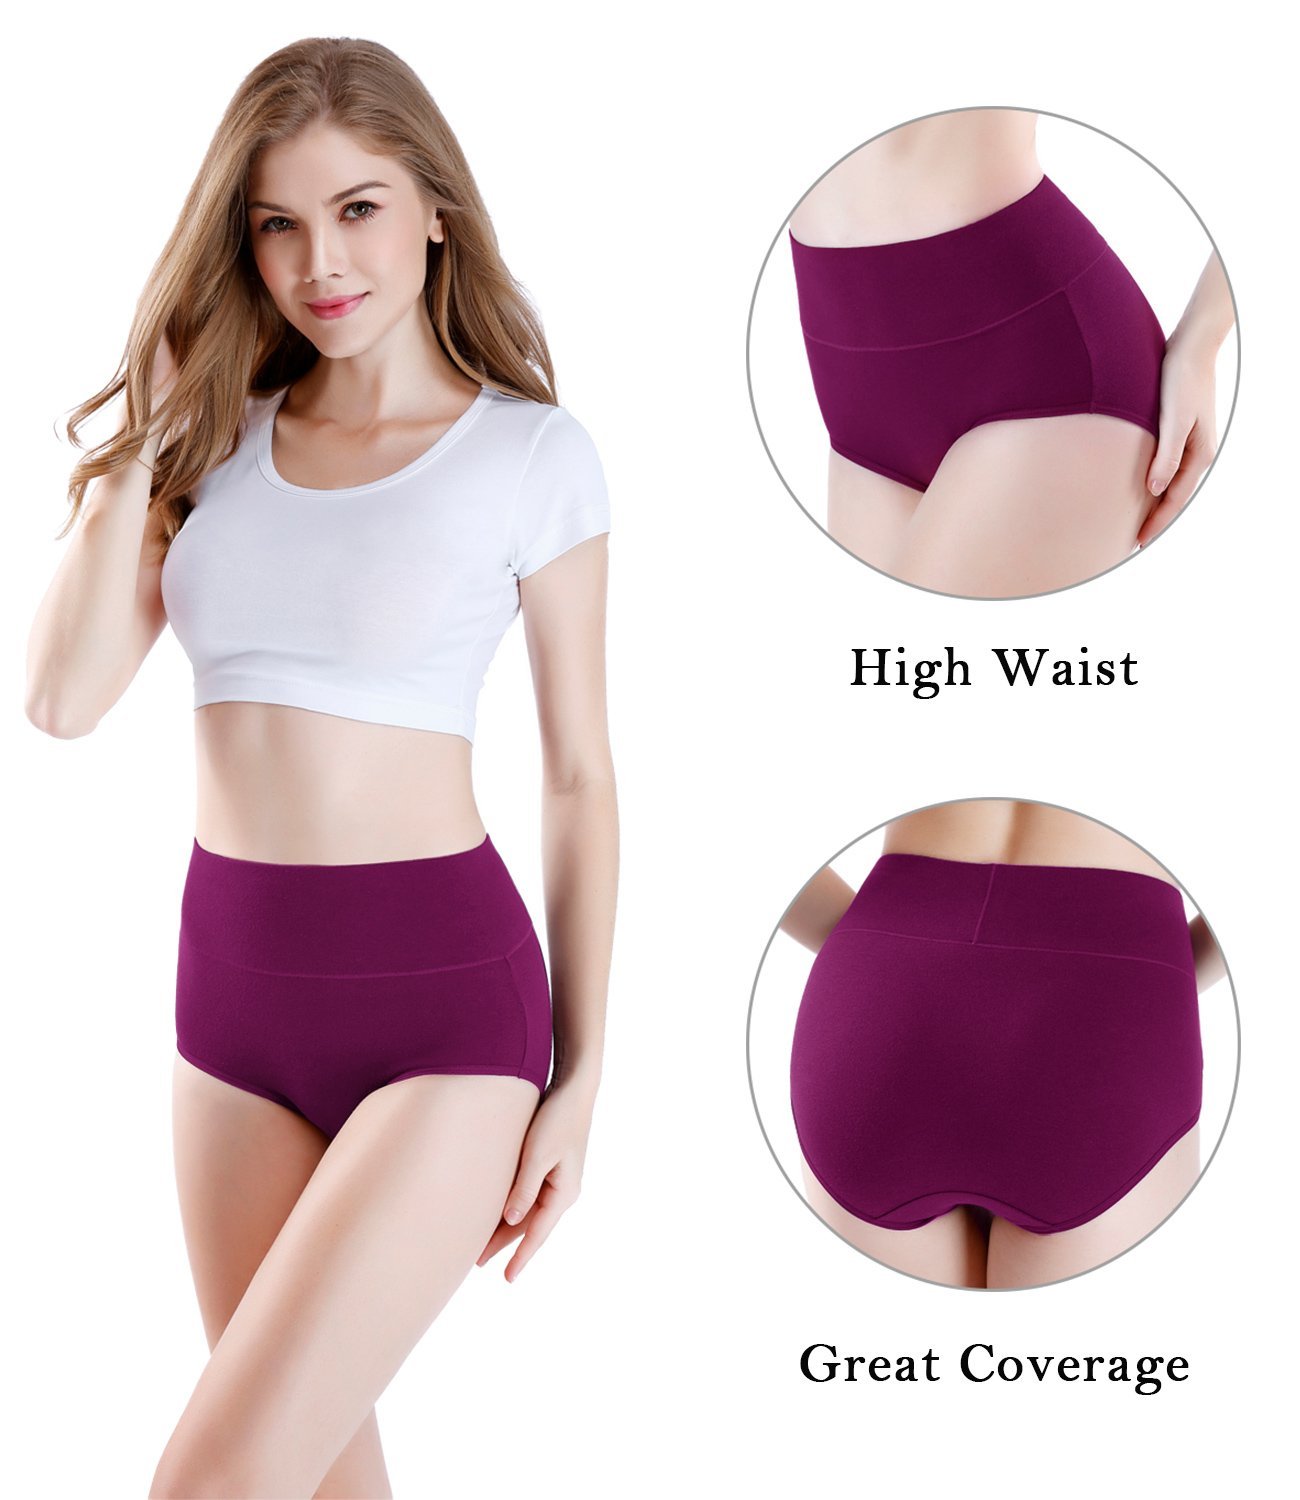 wirarpaWomen's Cotton Underwear High Waisted Ladies Panties Full